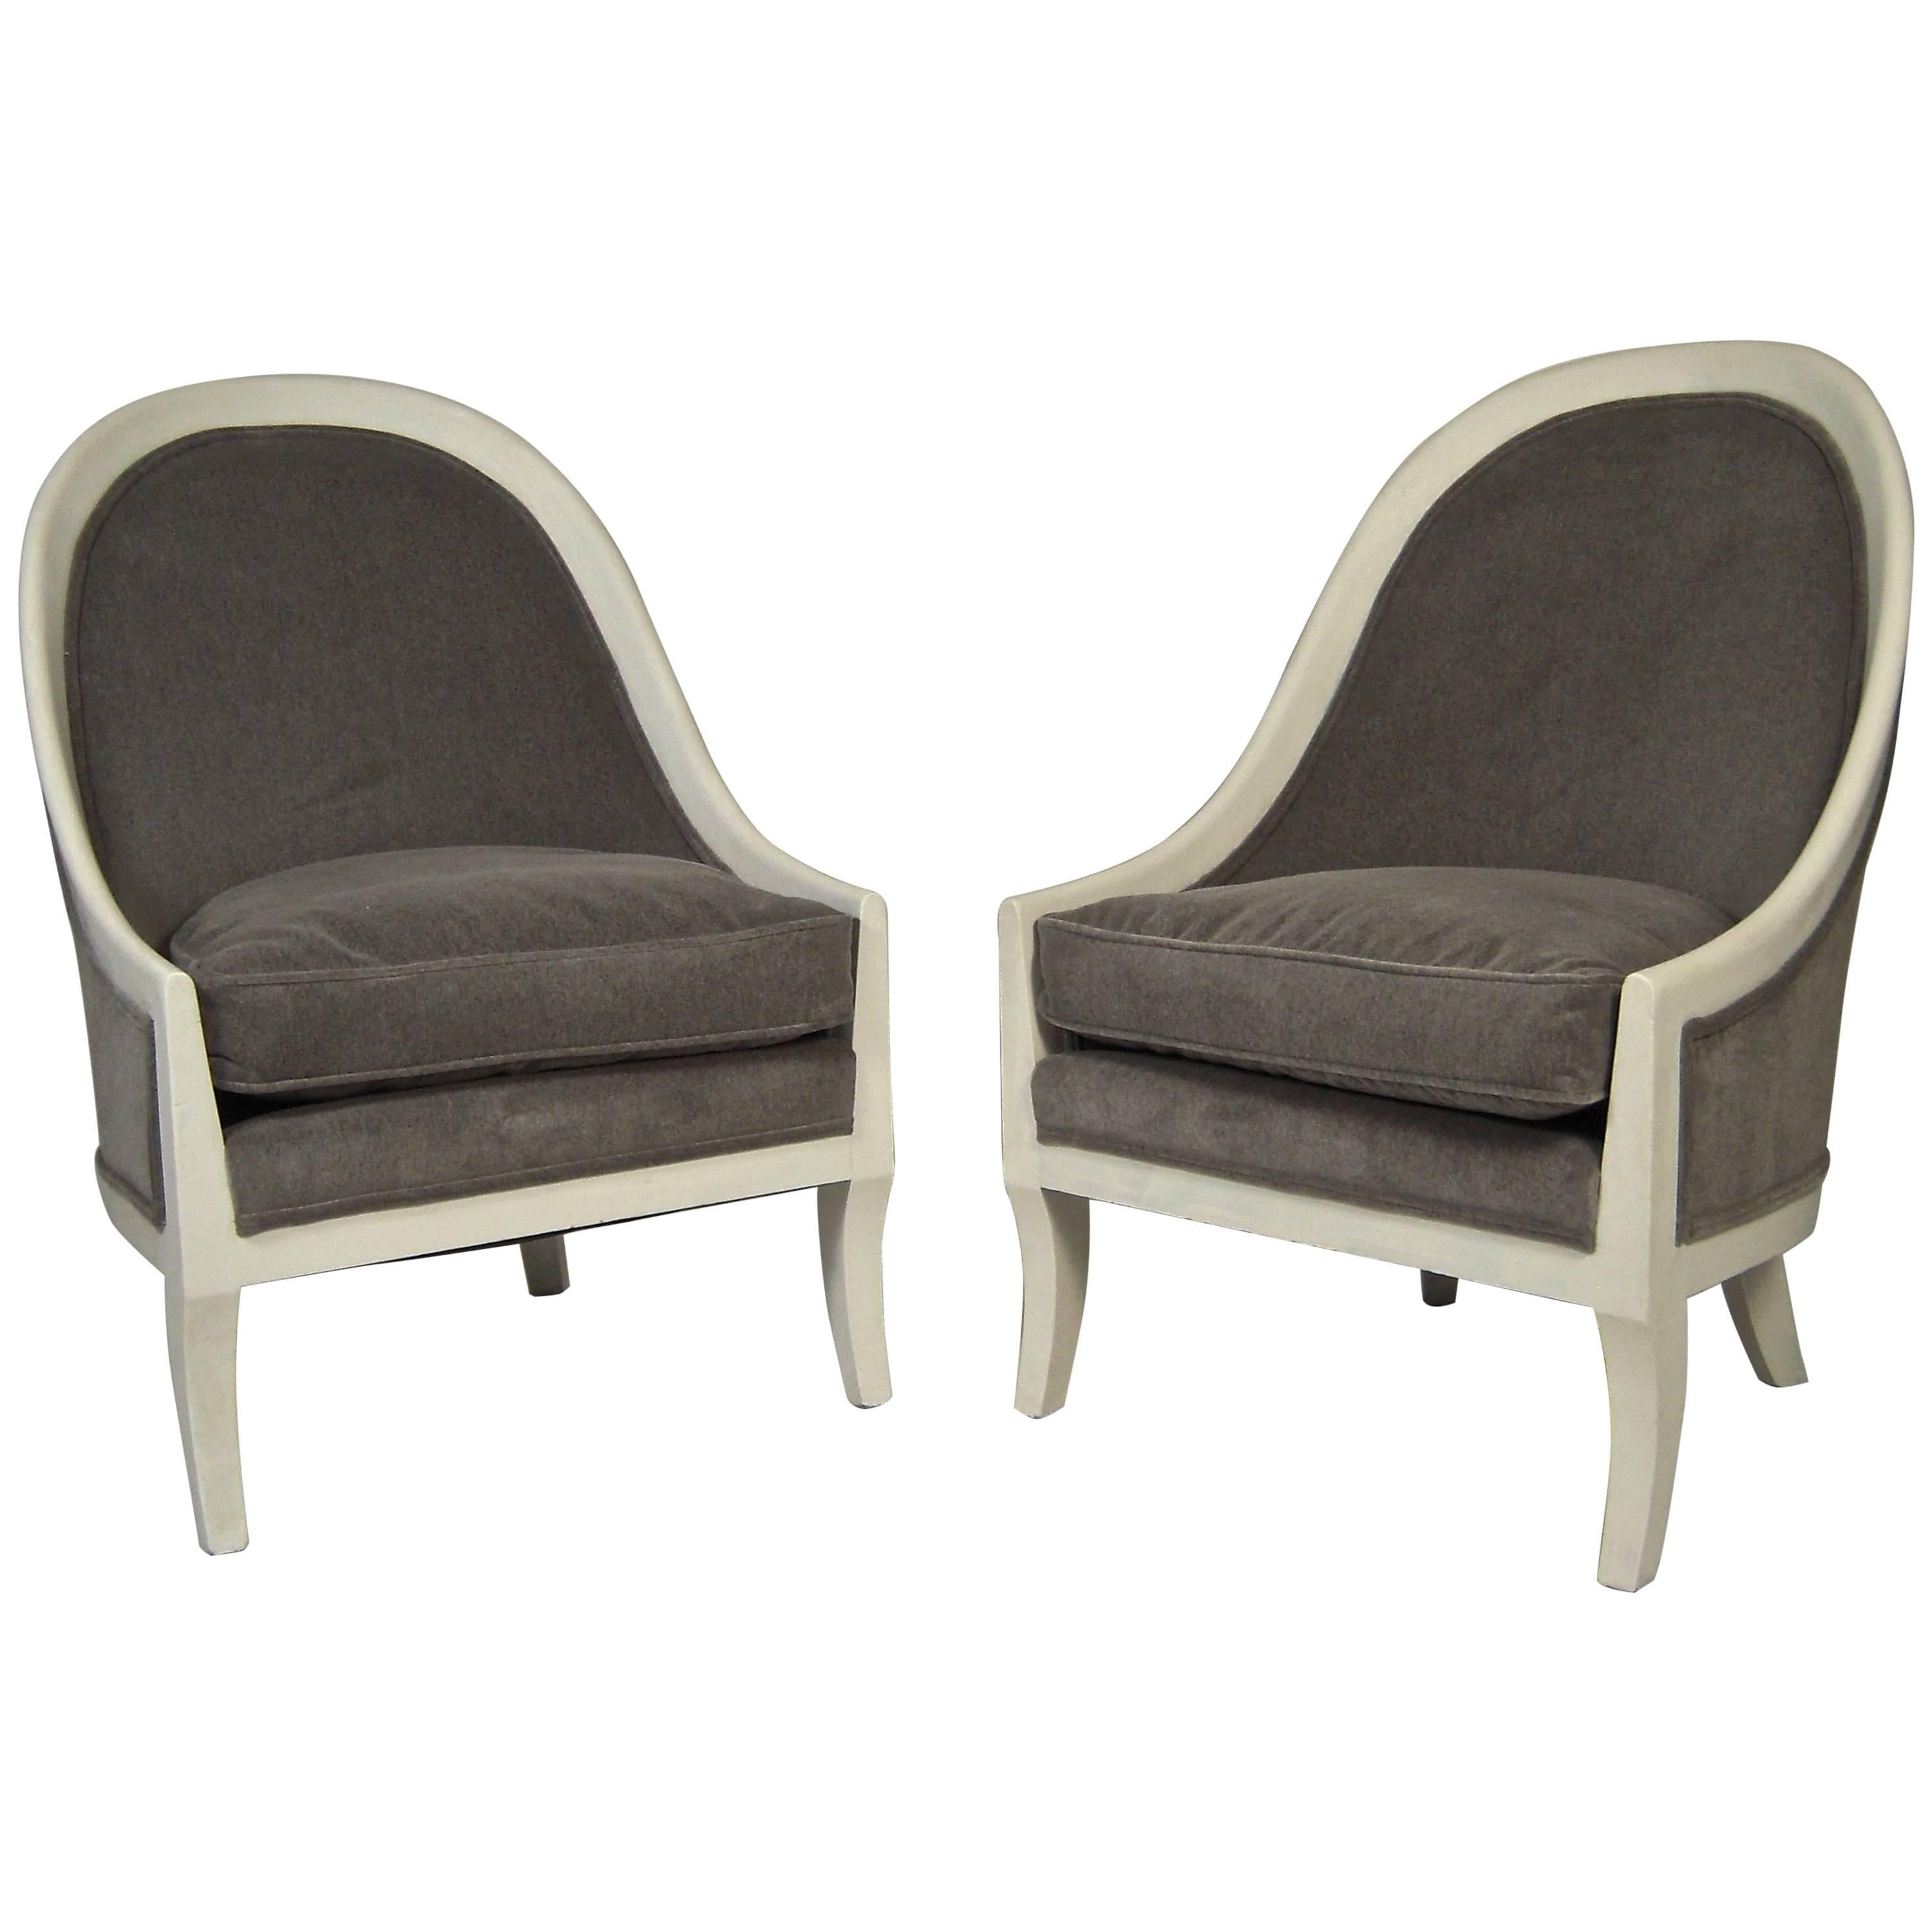 Pair of Regency Style Gondola Back Upholstered Chairs